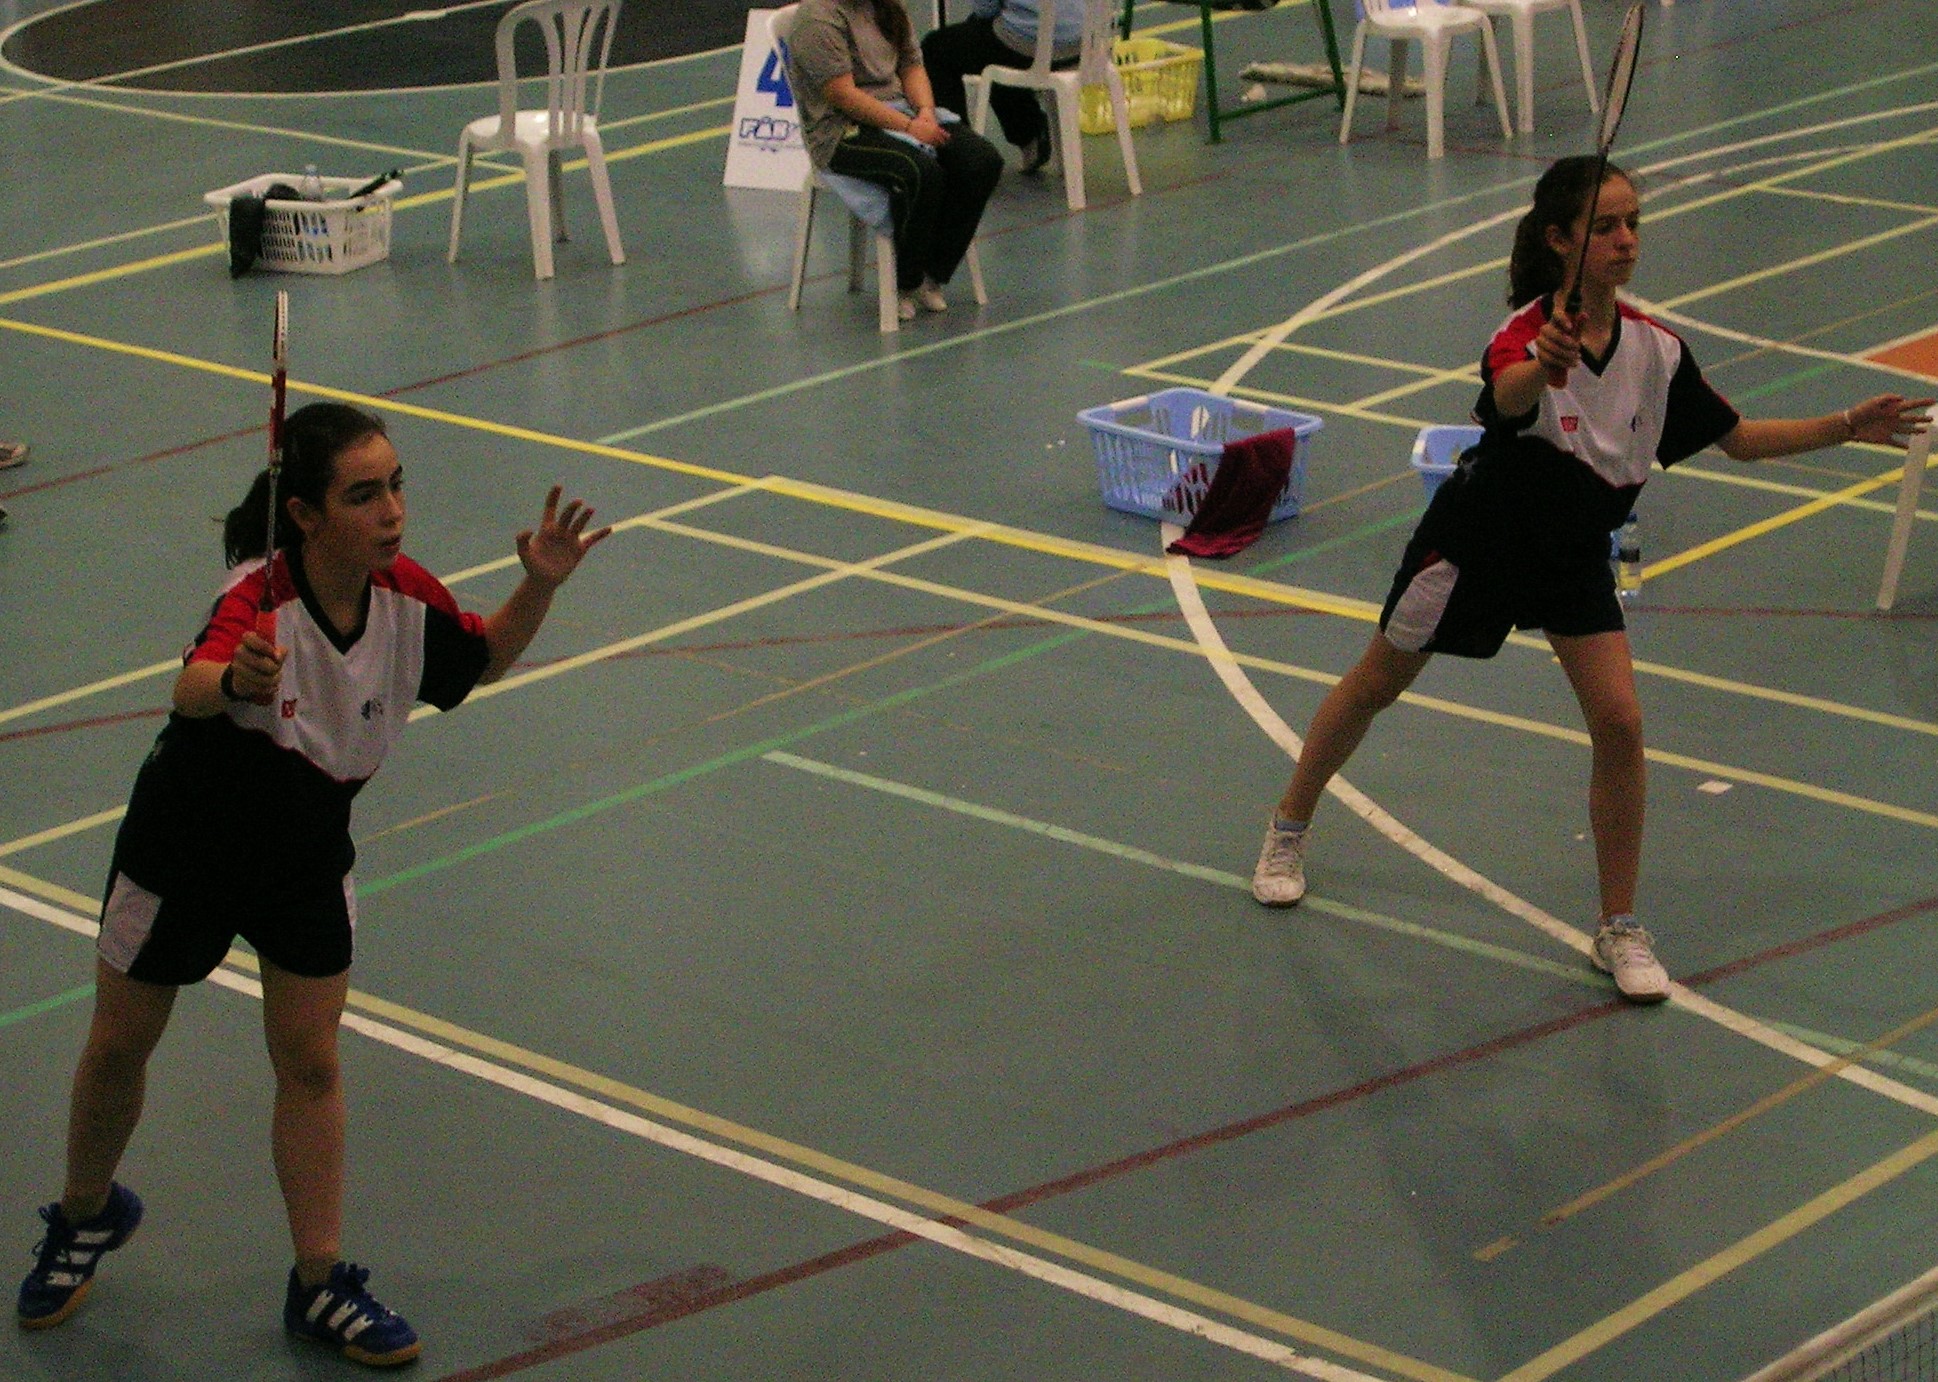 Mini-Ines playing badminton back in 2009